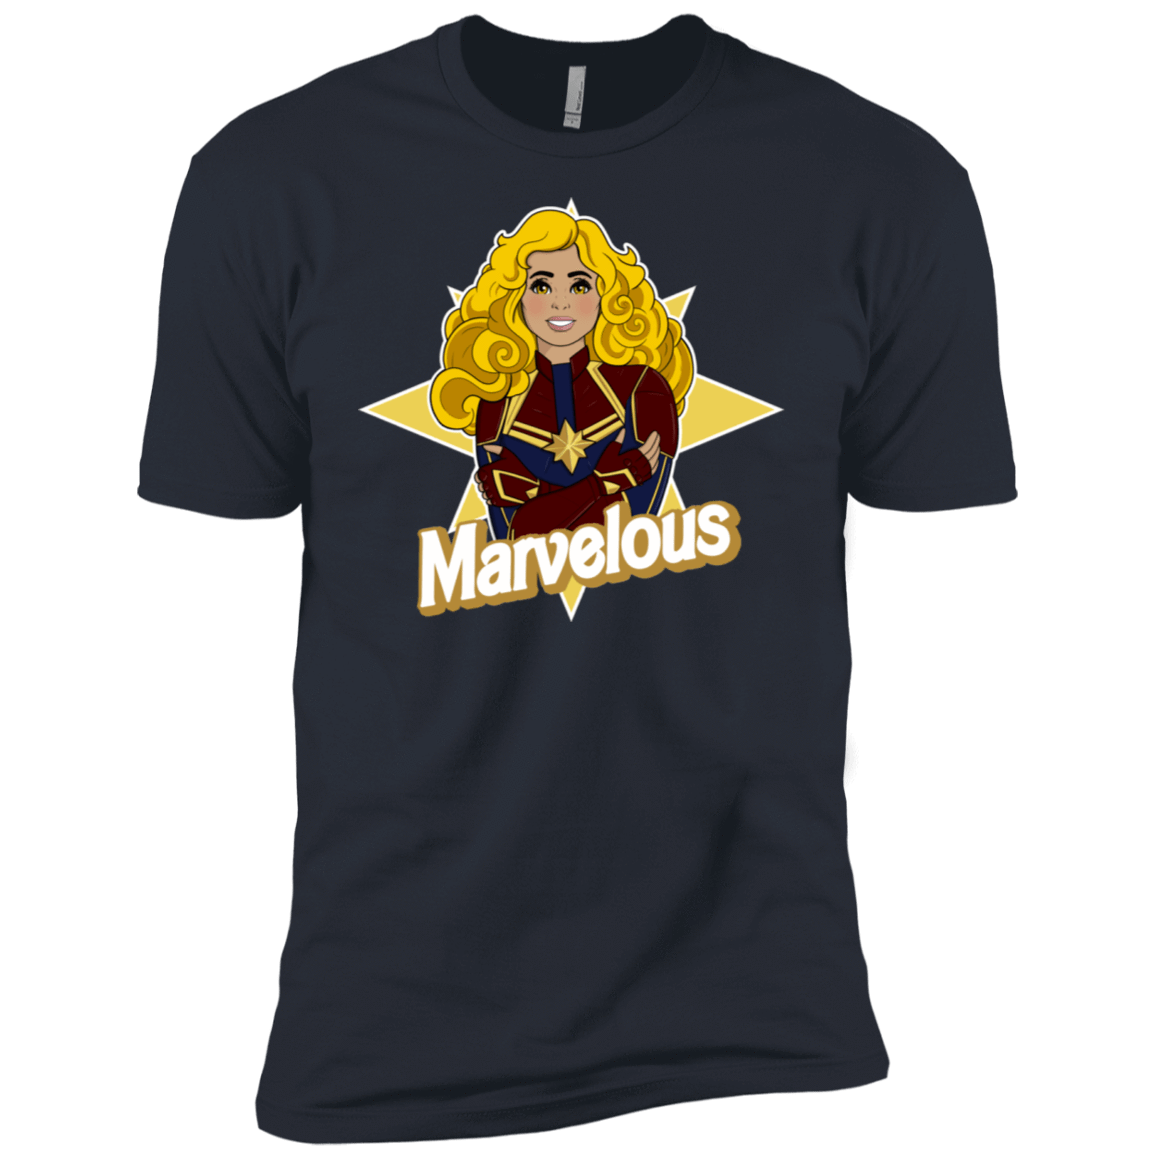 T-Shirts Indigo / X-Small Marvelous Men's Premium T-Shirt